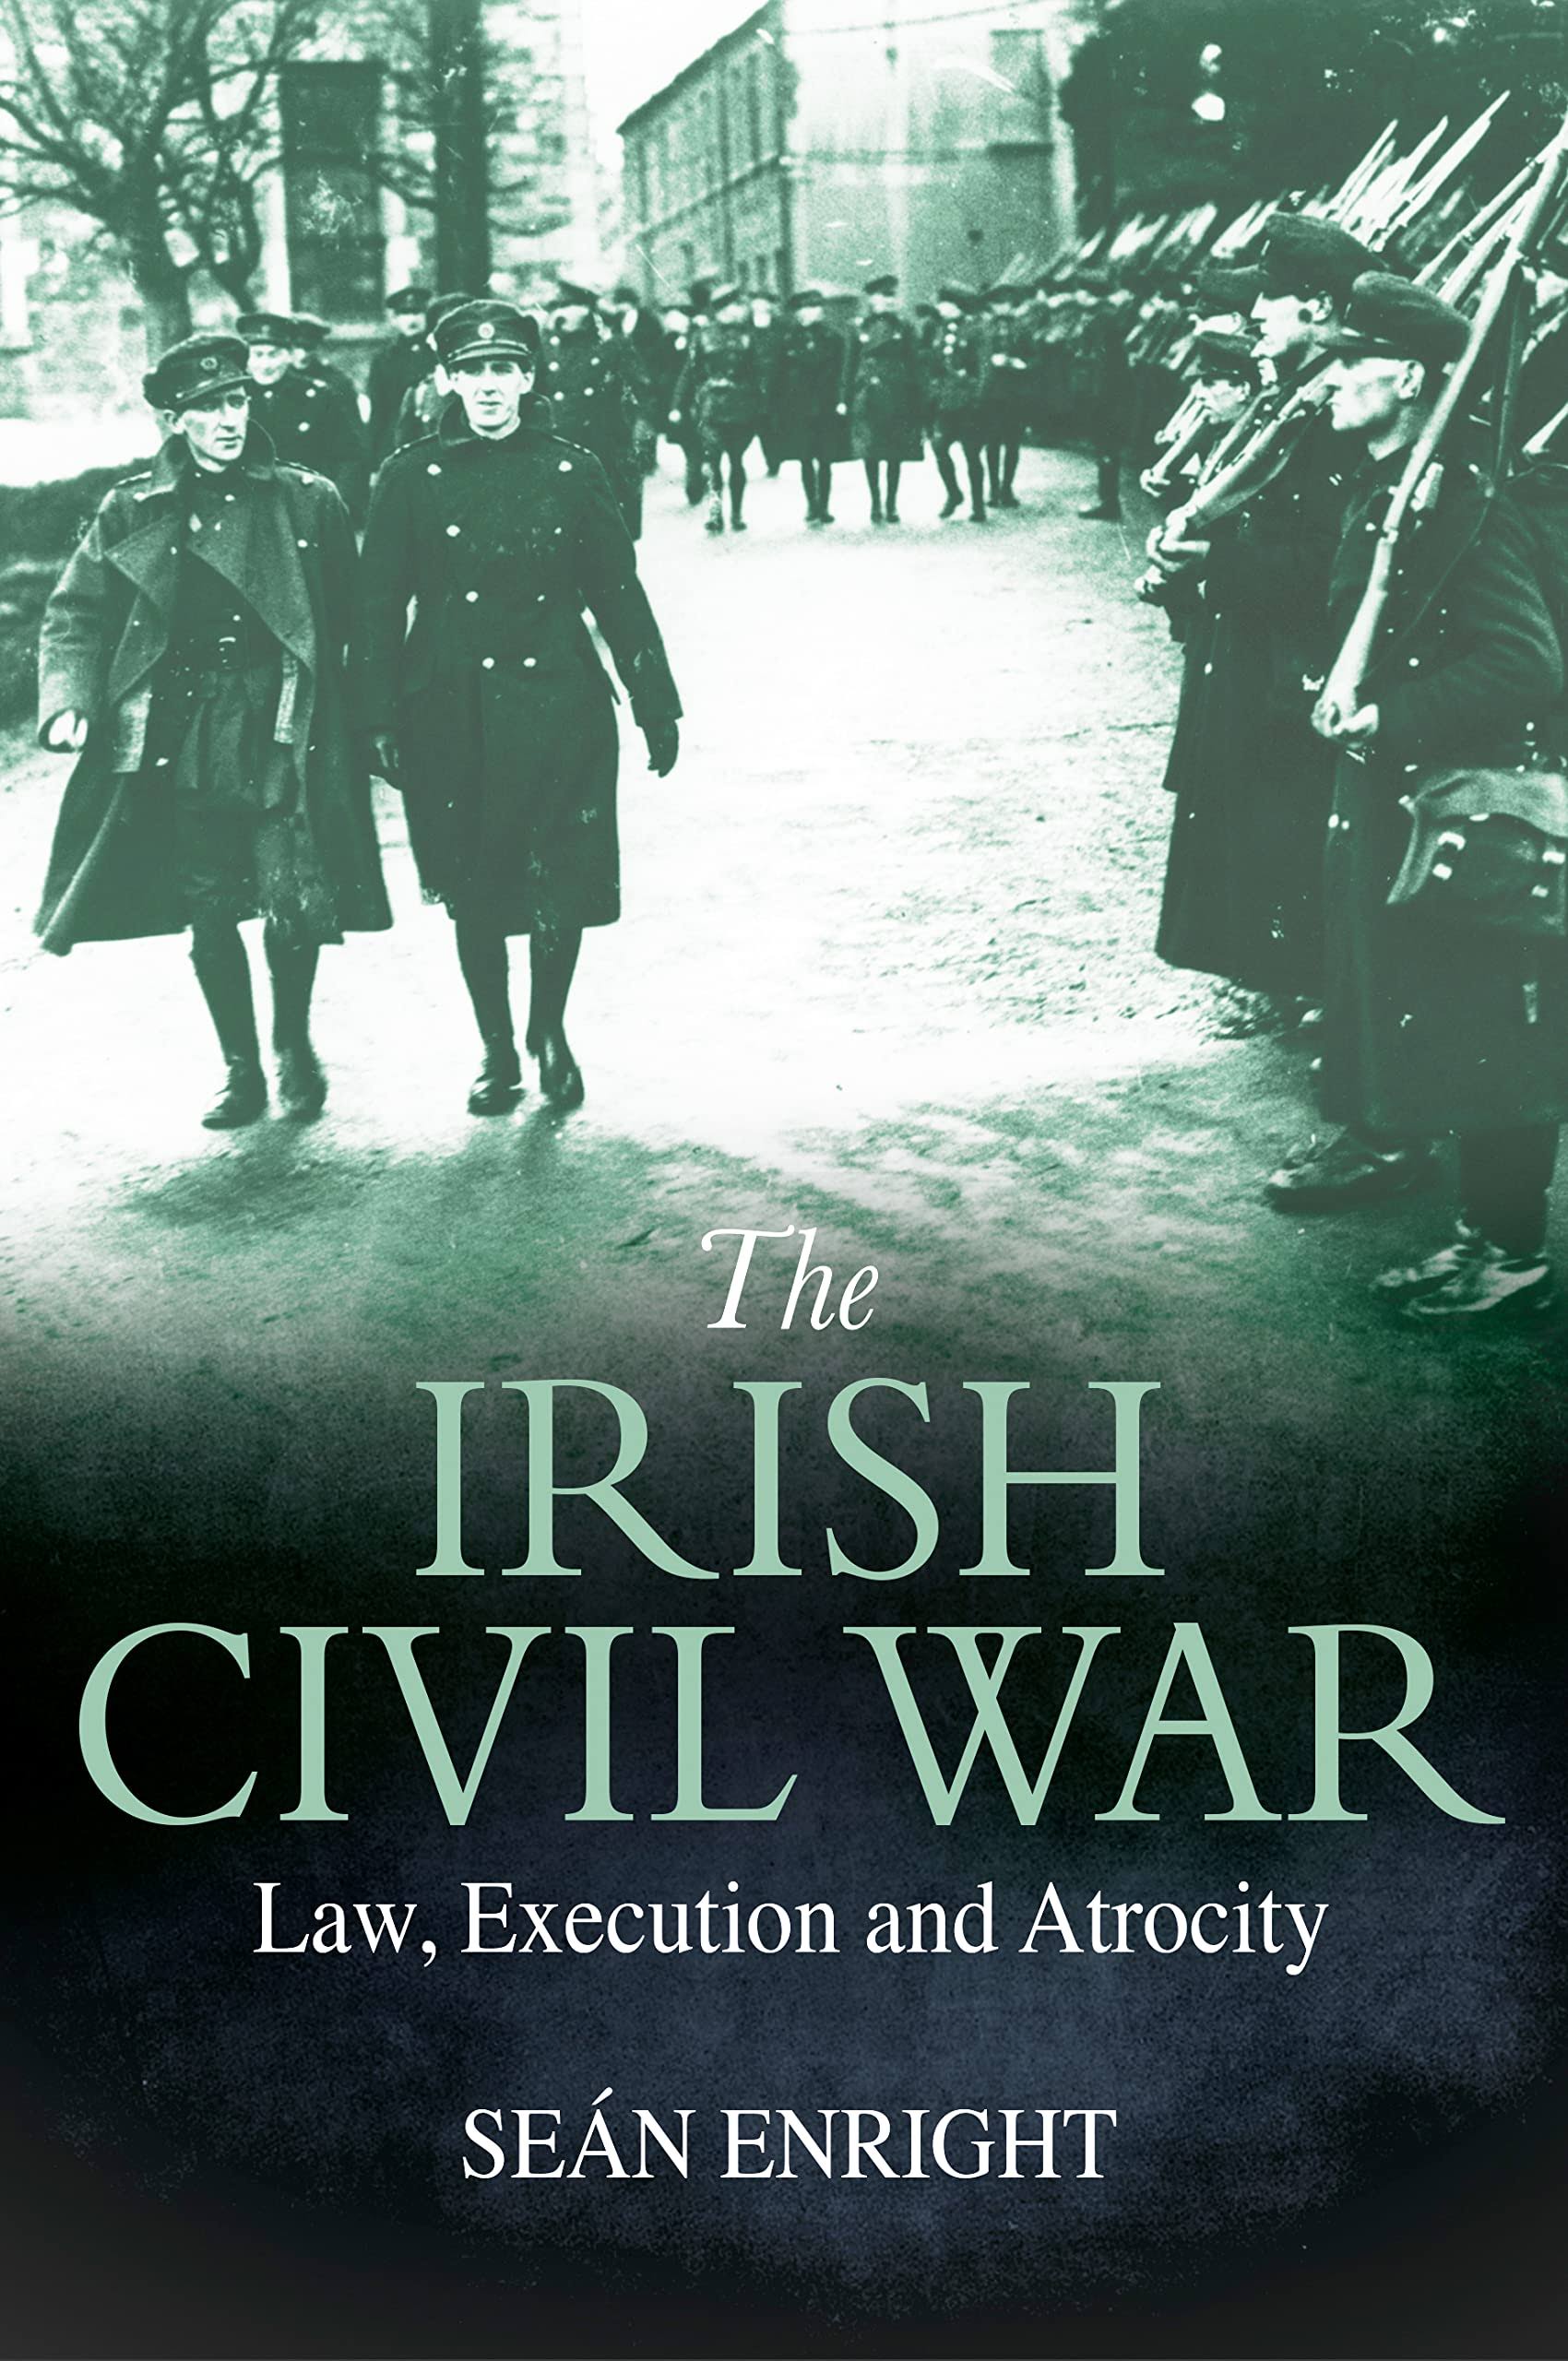 The Irish Civil War by Sean Enright